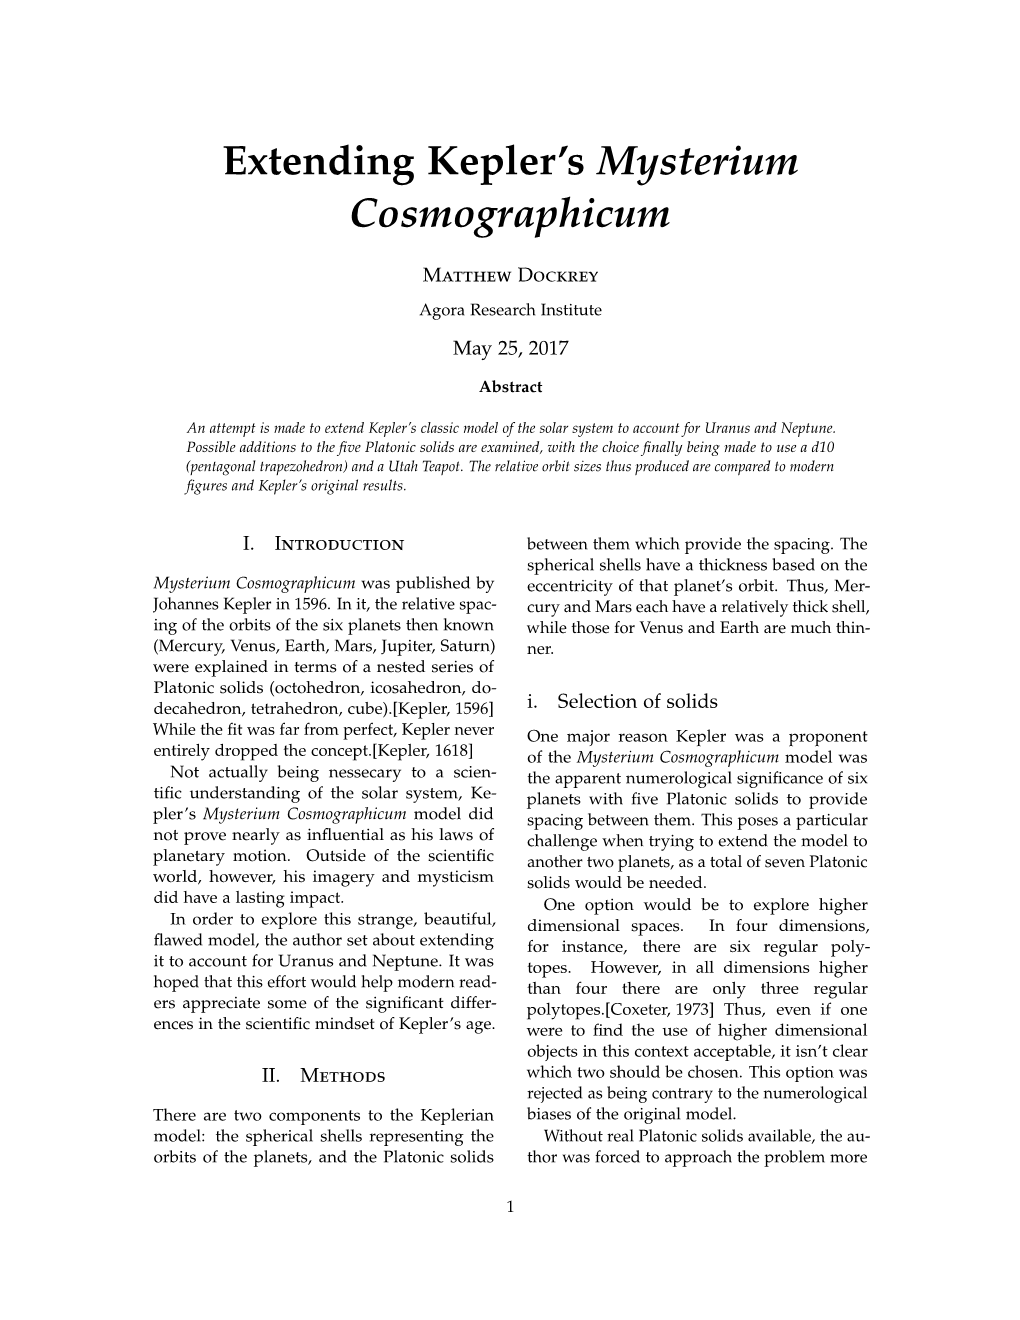 Extending Kepler's Mysterium Cosmographicum